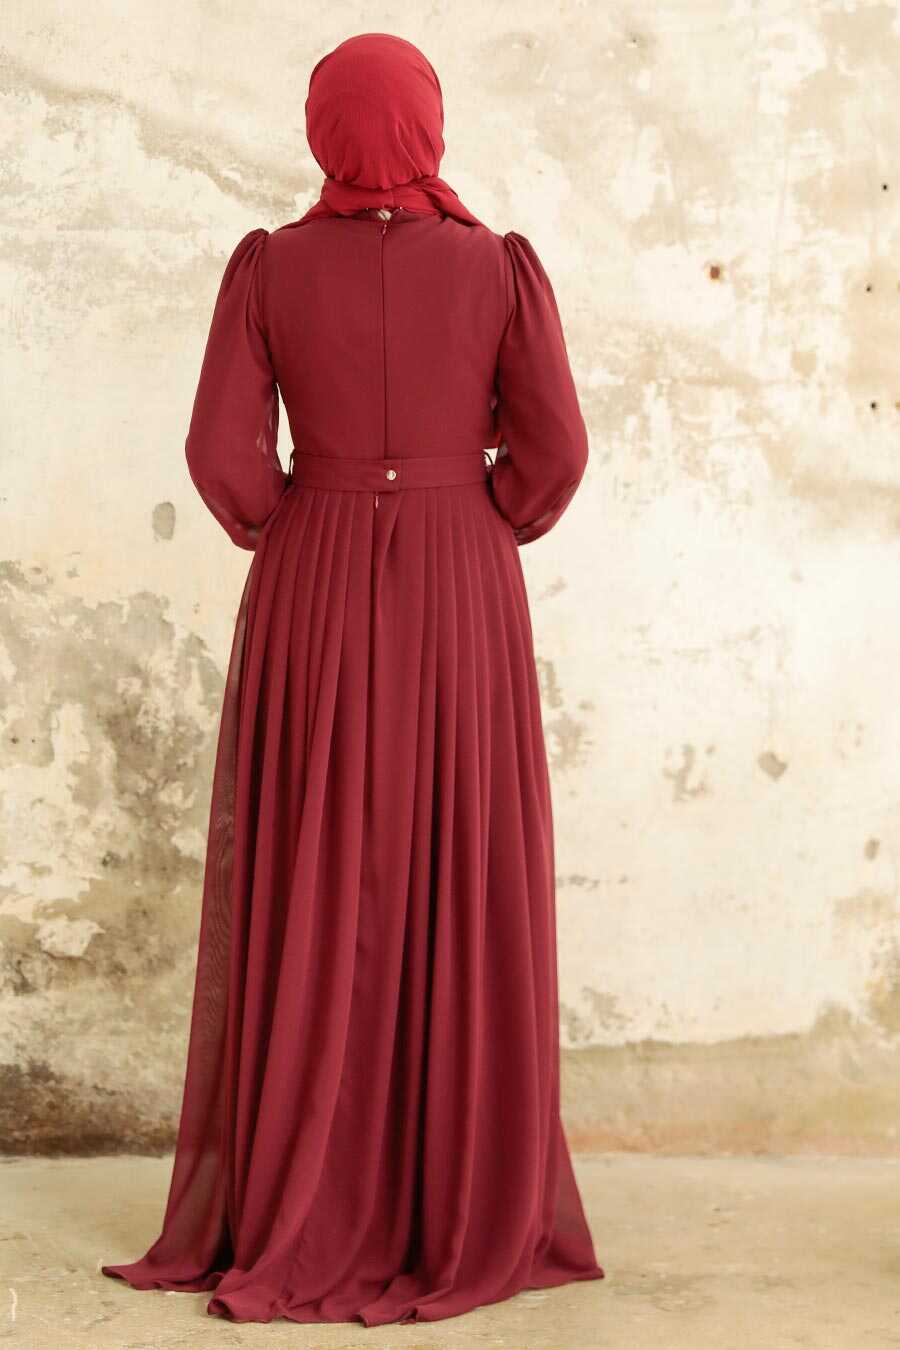 Neva Style - Elegant Claret Red Muslim Long Sleeve Dress 3773BR